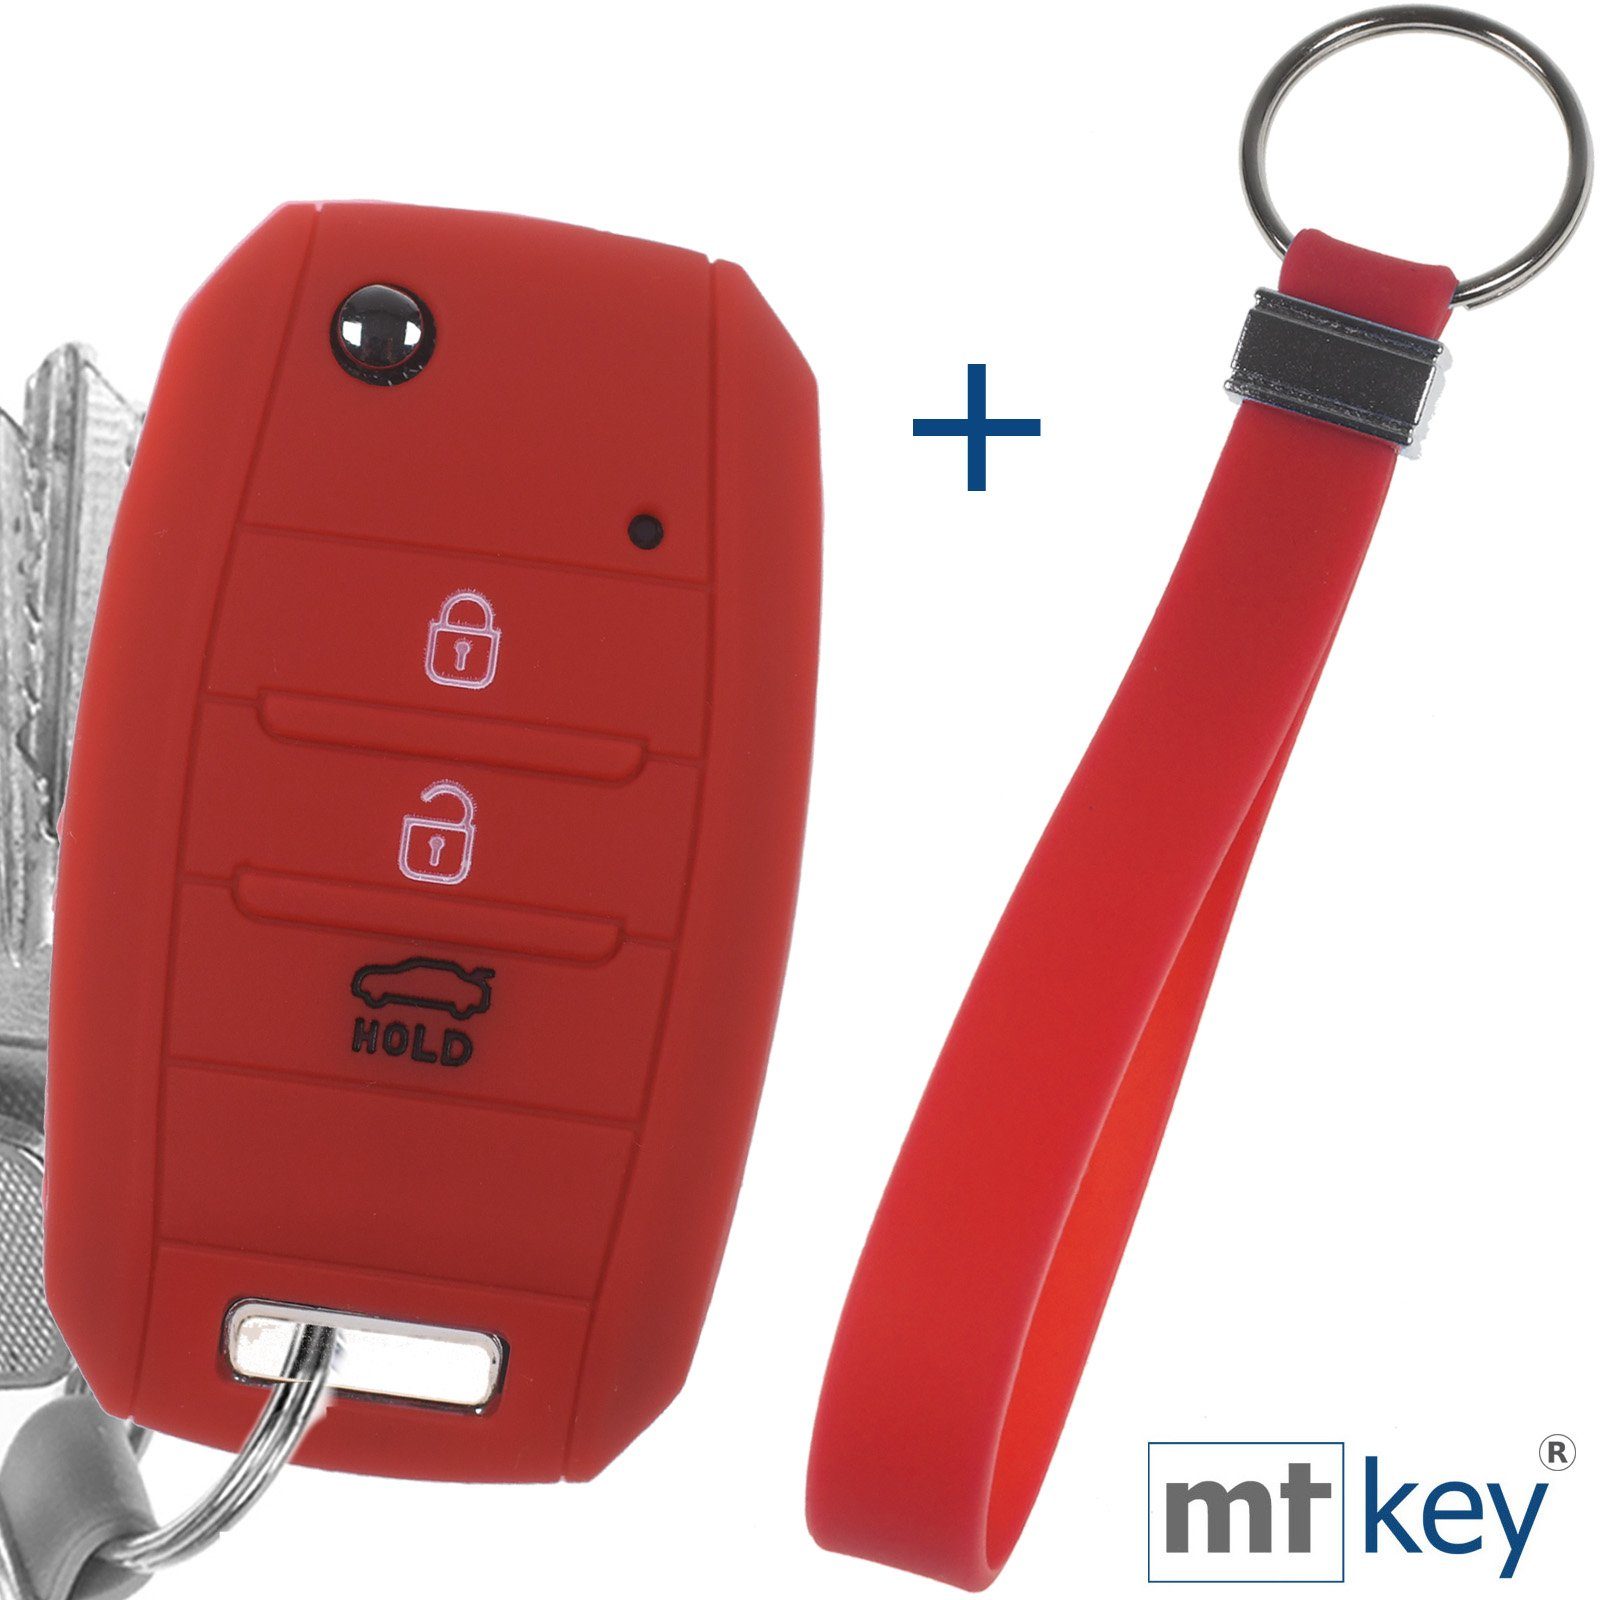 Autoschlüssel Soul für Tasten Silikon Stonic Schlüsseltasche Carens Picantio Sportage Ceed Rot mit KIA 3 Schlüsselband, Schutzhülle Softcase mt-key Rio